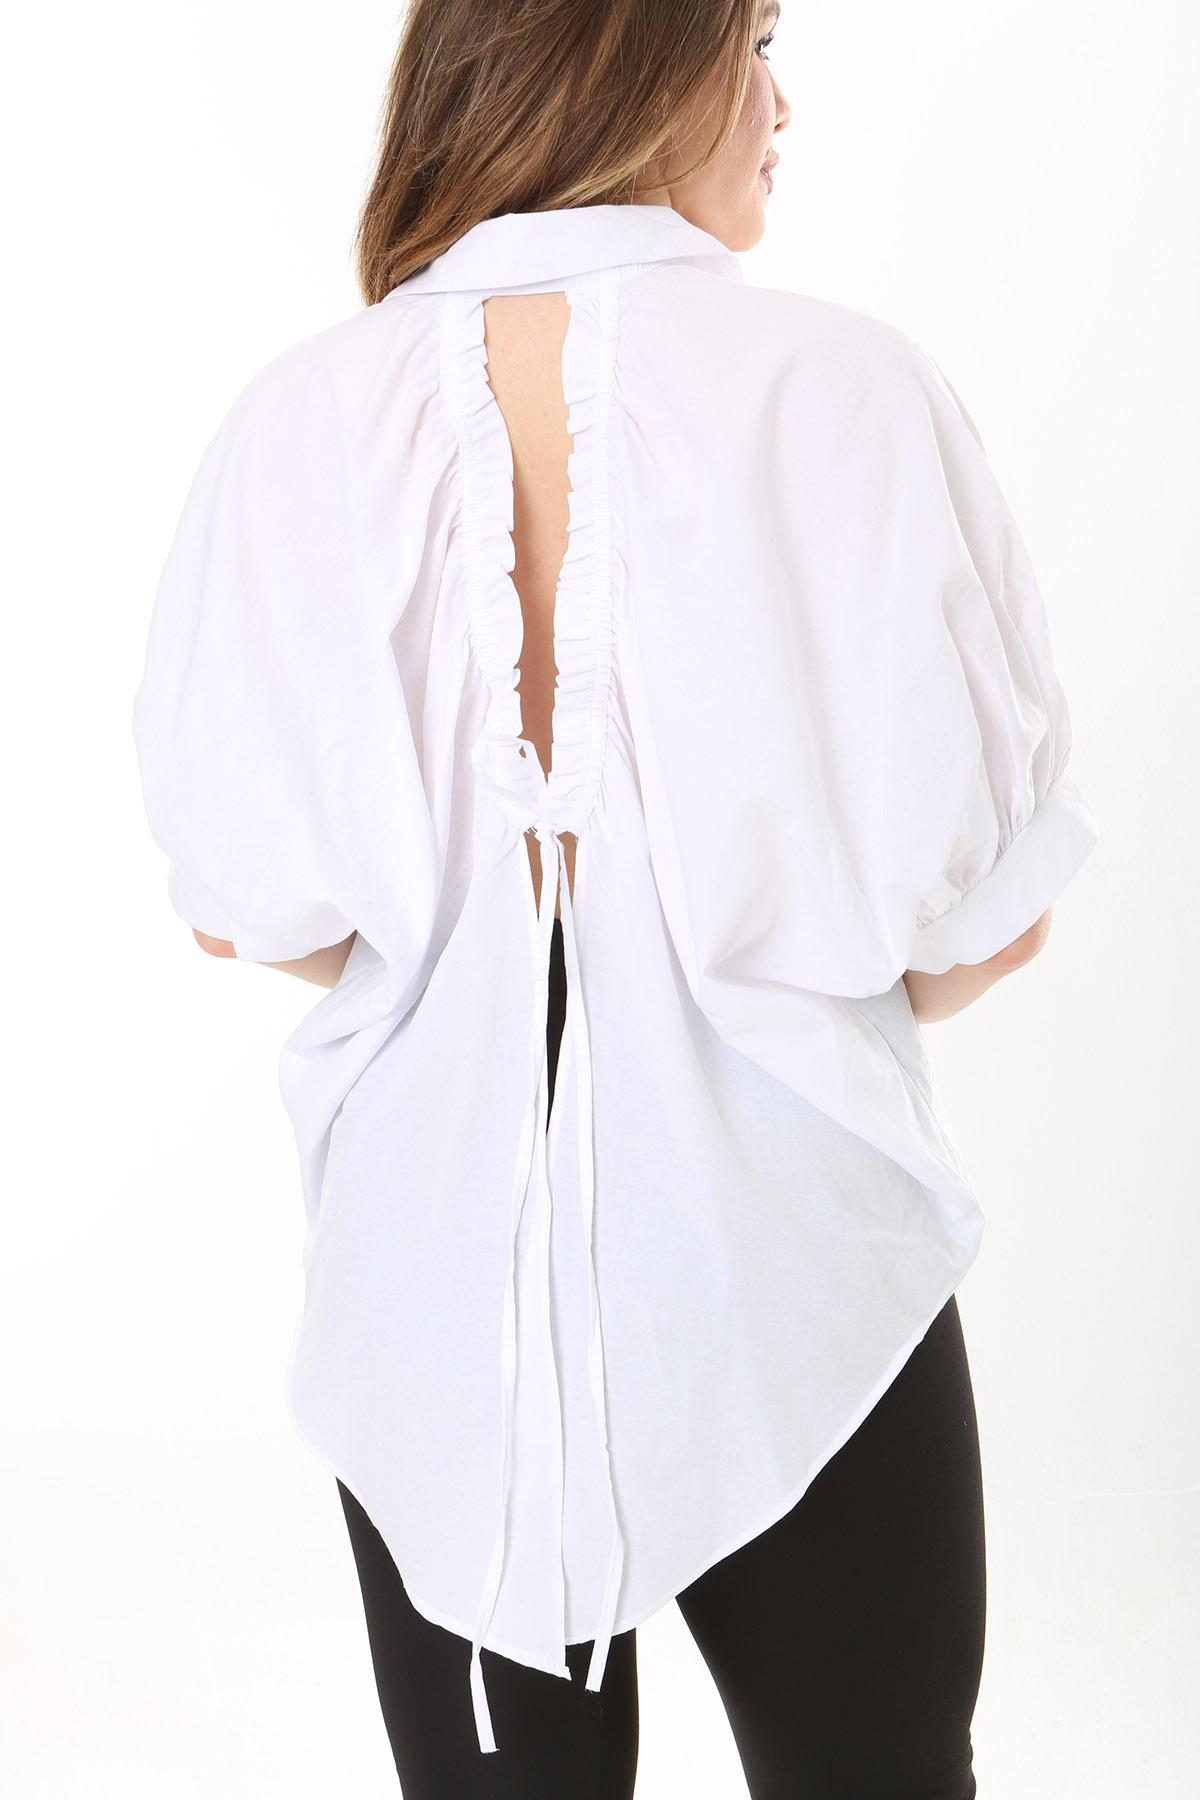 Şans Women's Plus Size White Back Detailed Front Buttoned Shirt